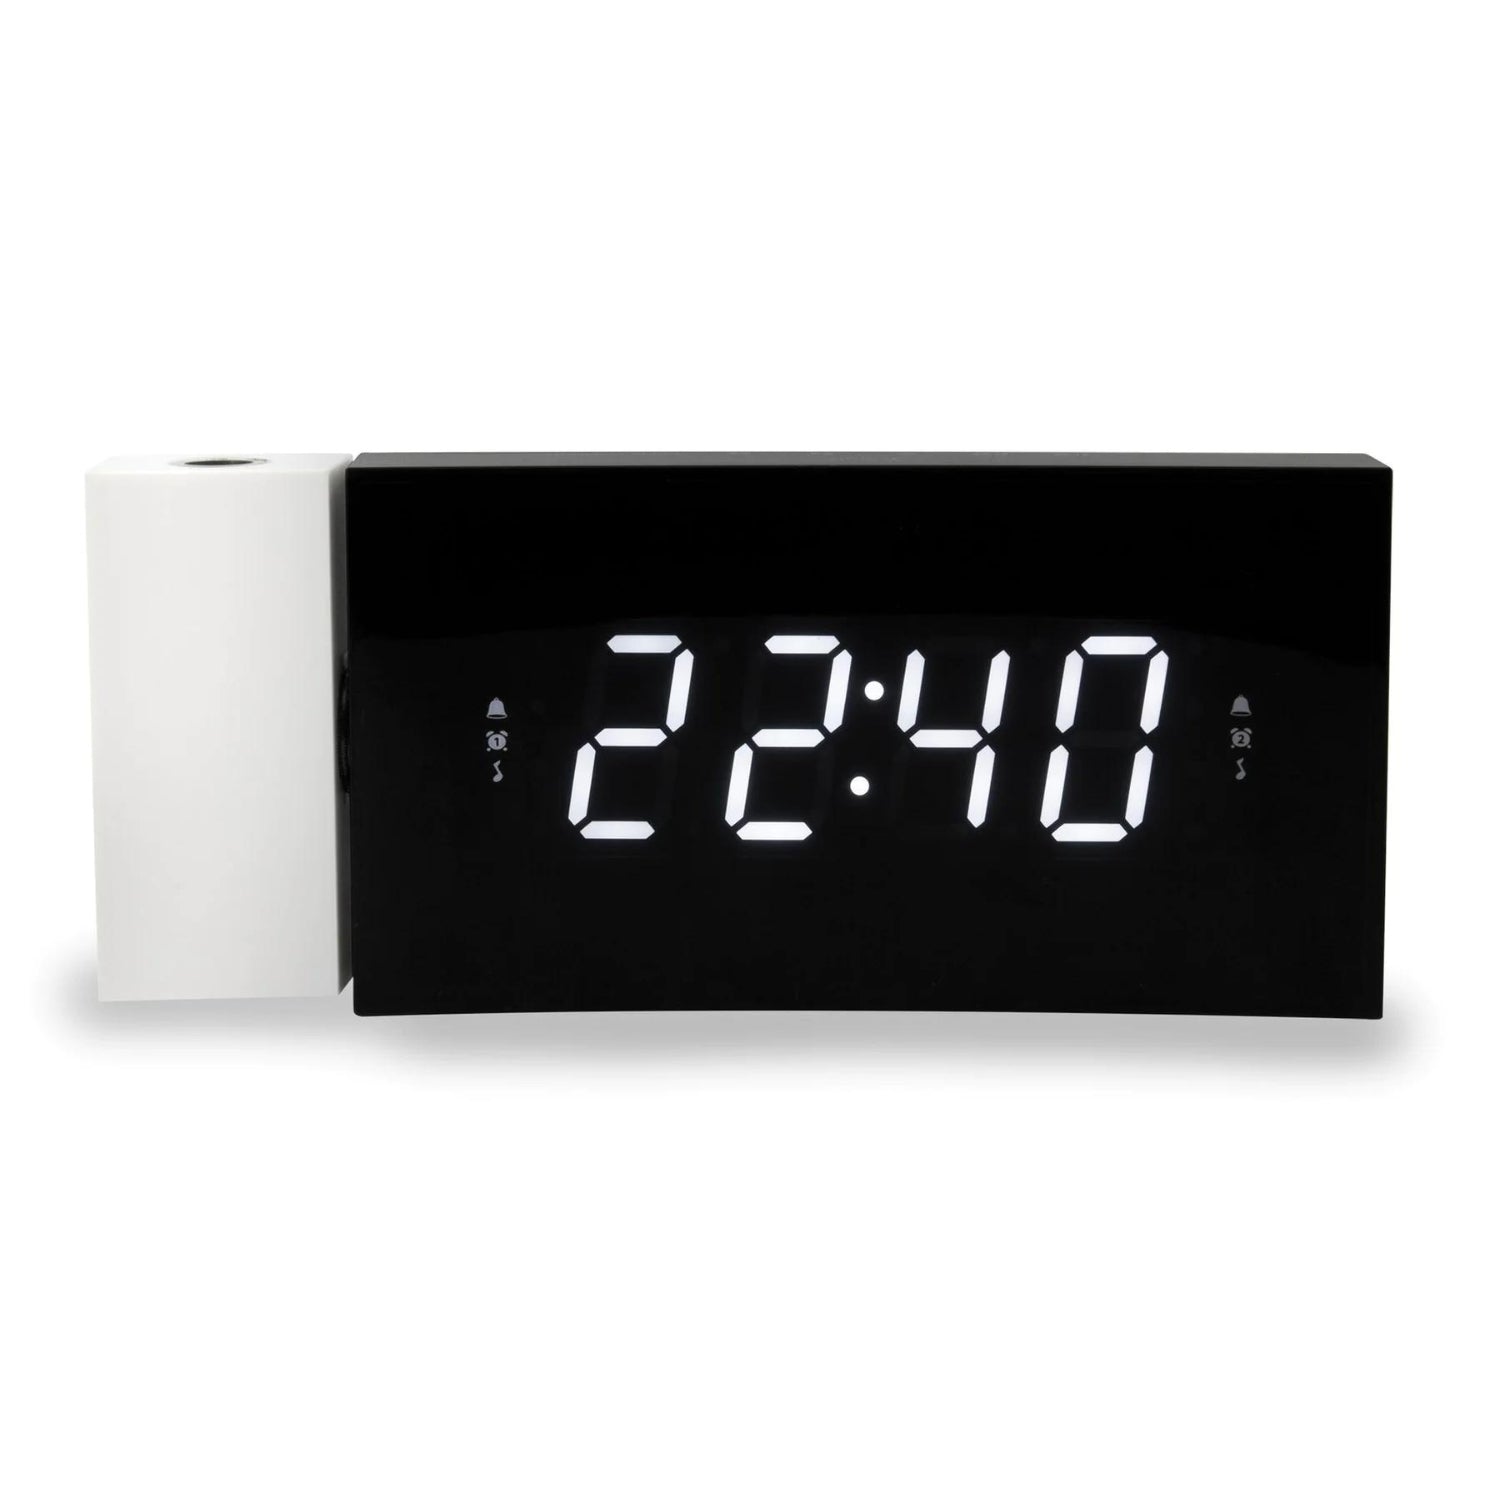 Soundmaster UR8600 Jumbo LED FM PLL clock radio alarm clock with projection